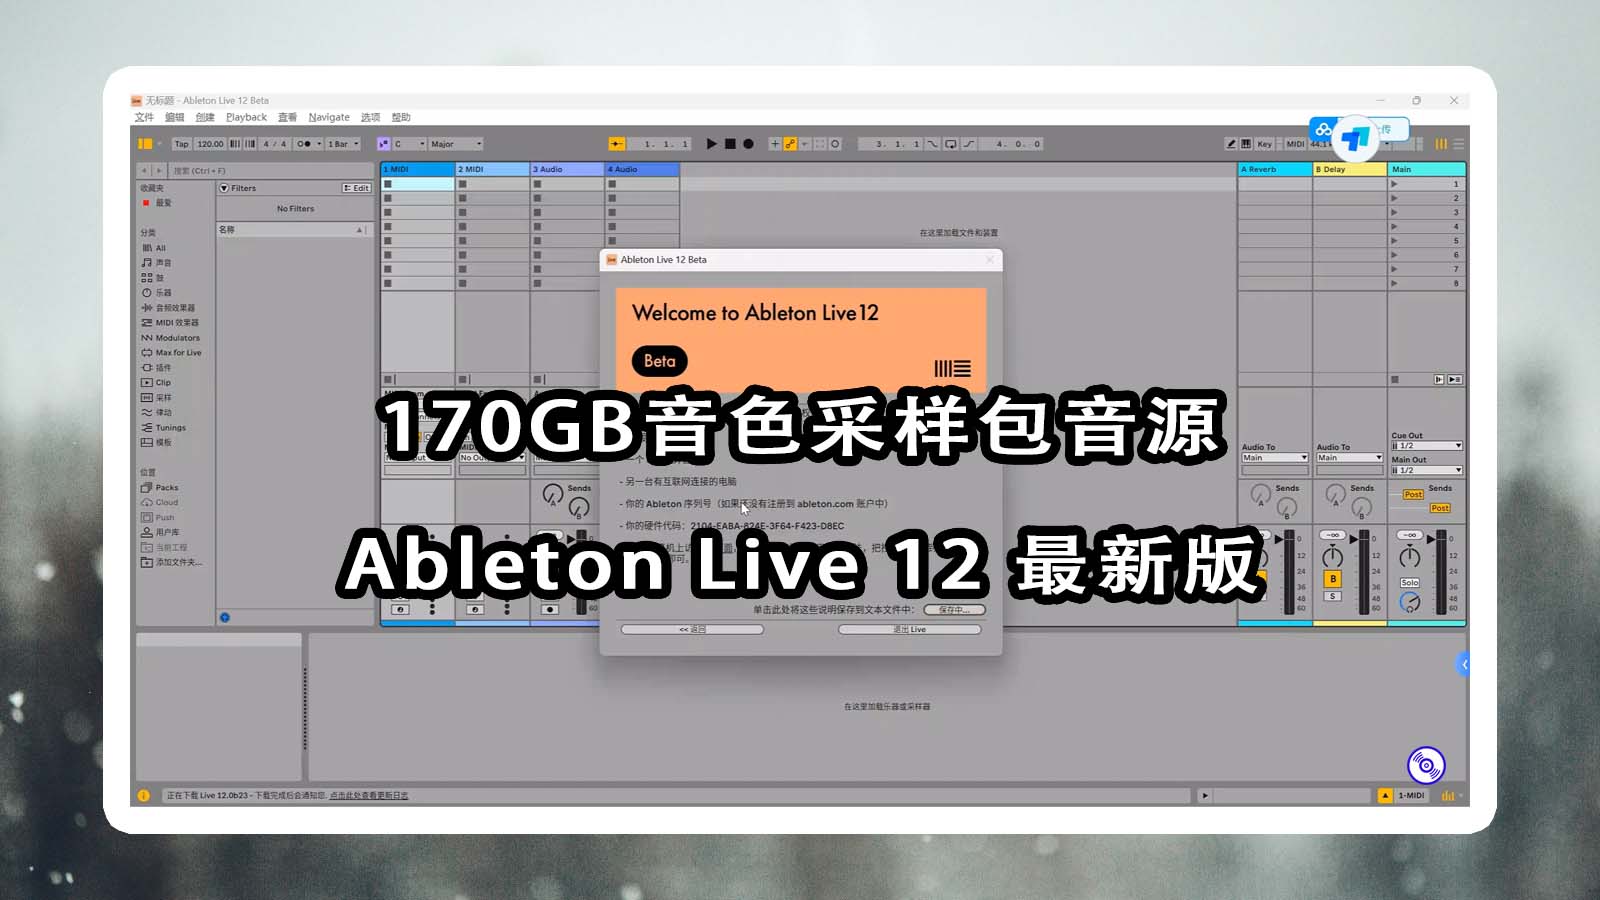 Ableton Live 12 最新版软件Win-Mac + 170GB完整音源音色采样包套装【软件+音源完整版】